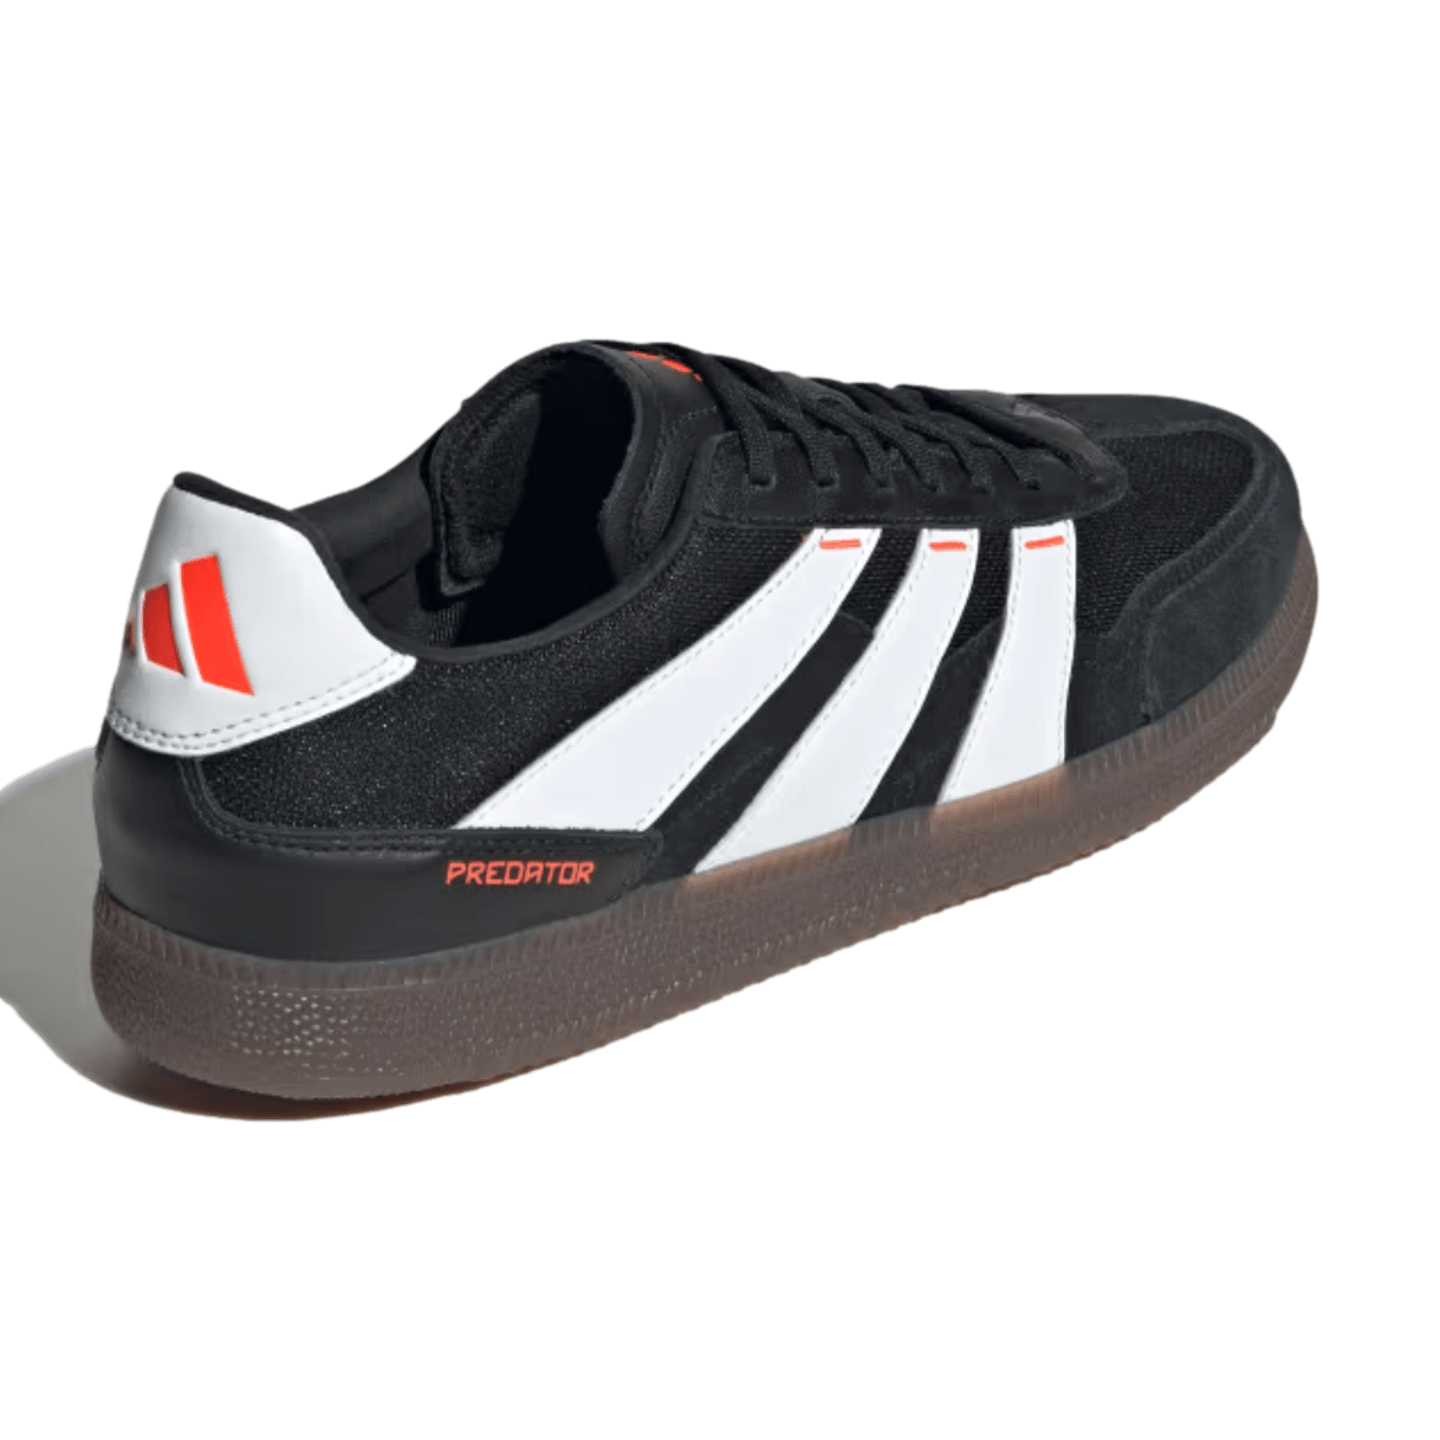 Adidas Predator Freestyle Indoor Soccer Shoes